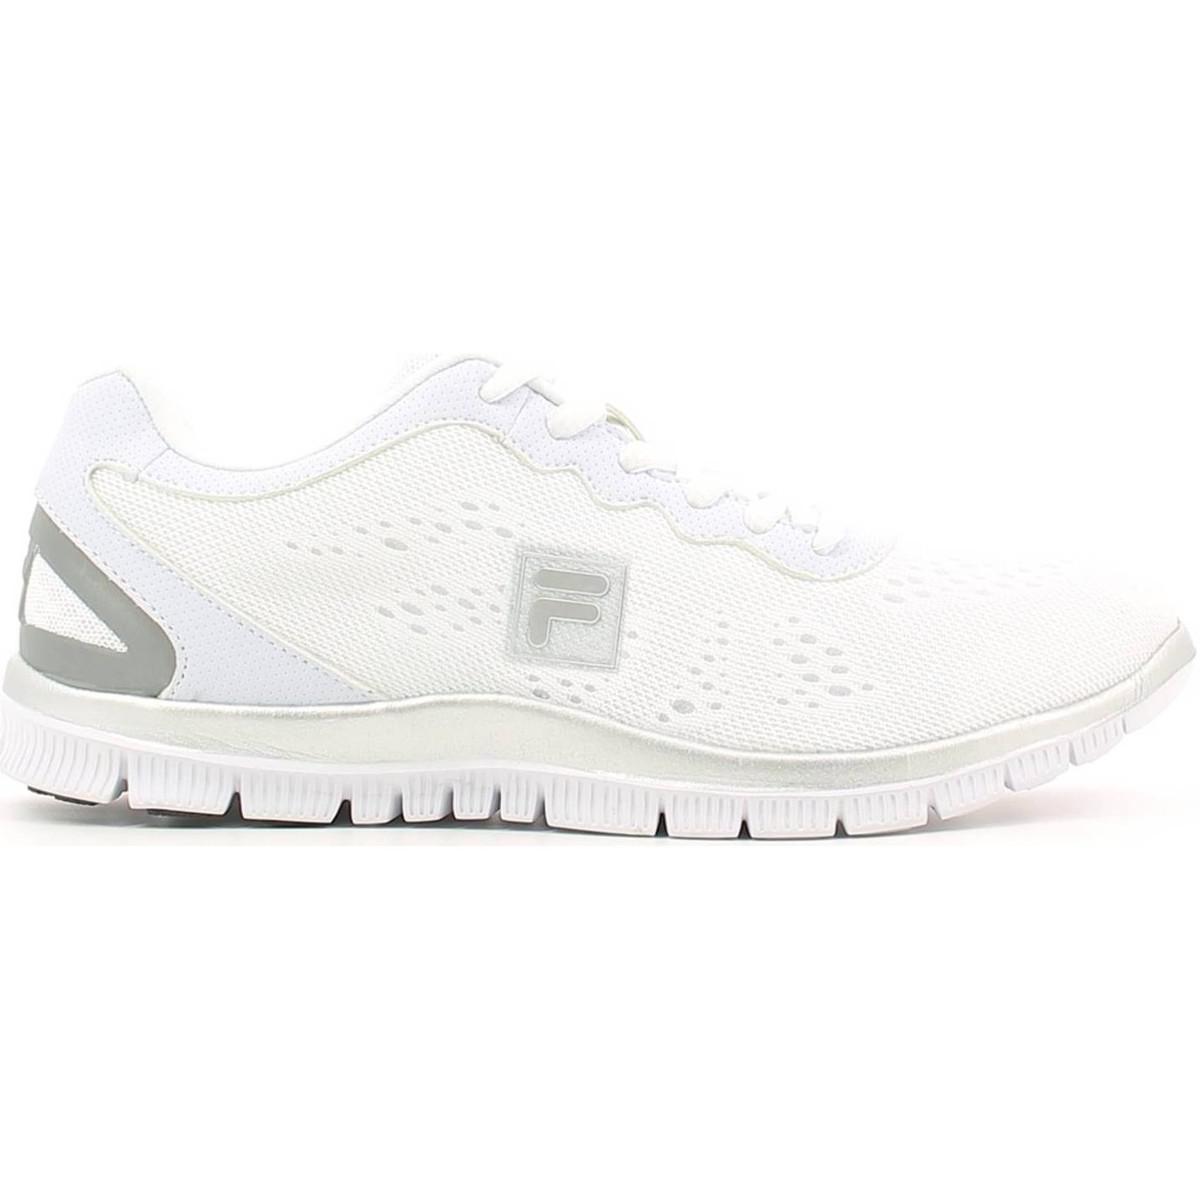 fila white running shoes womens